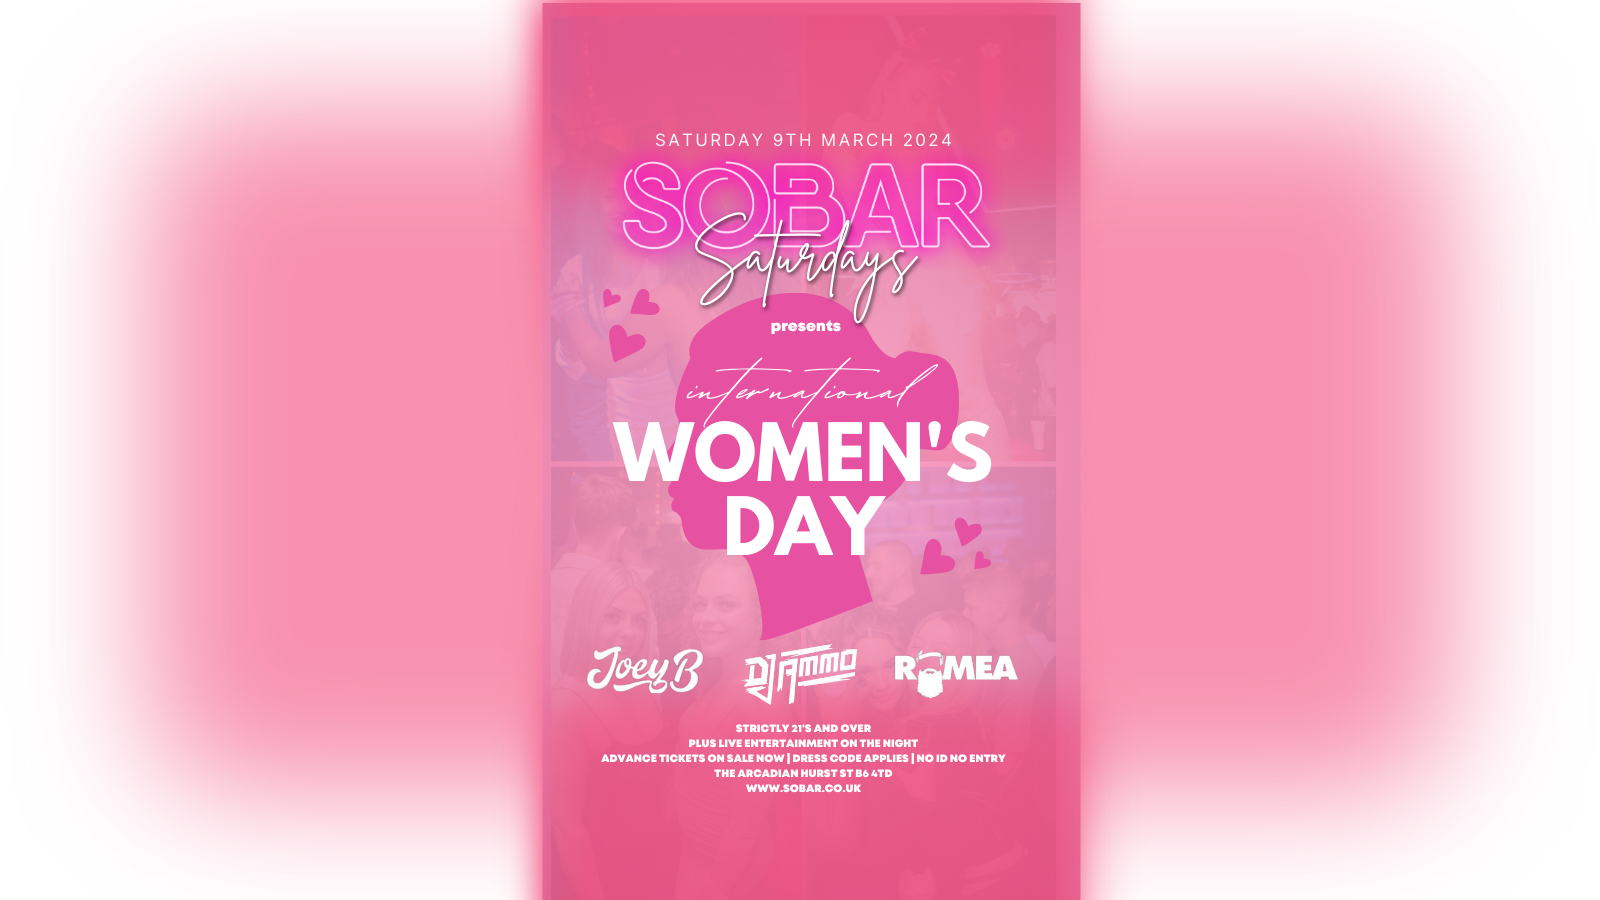 SOBAR SATURDAYS – INTERNATIONAL WOMEN’S DAY